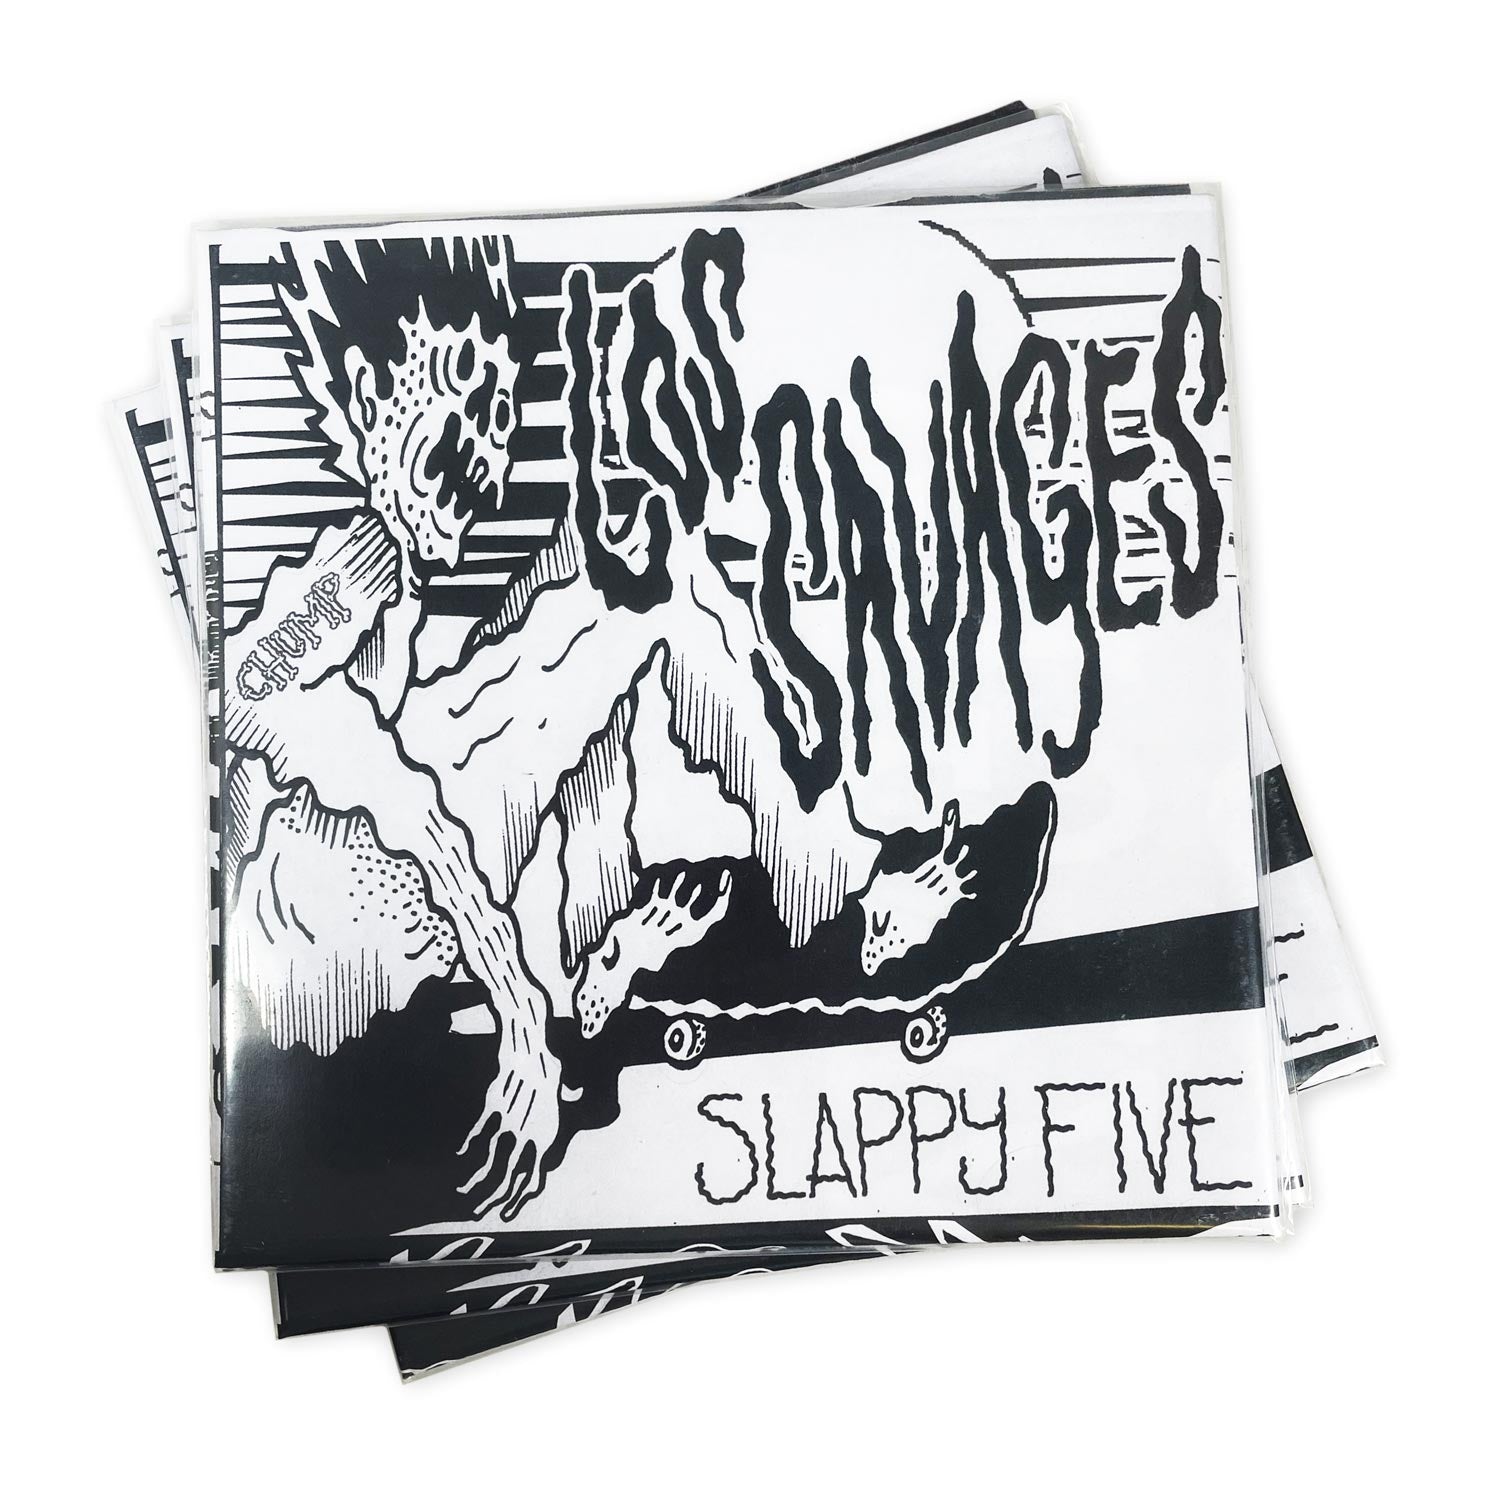 Los Savages - Slappy Five